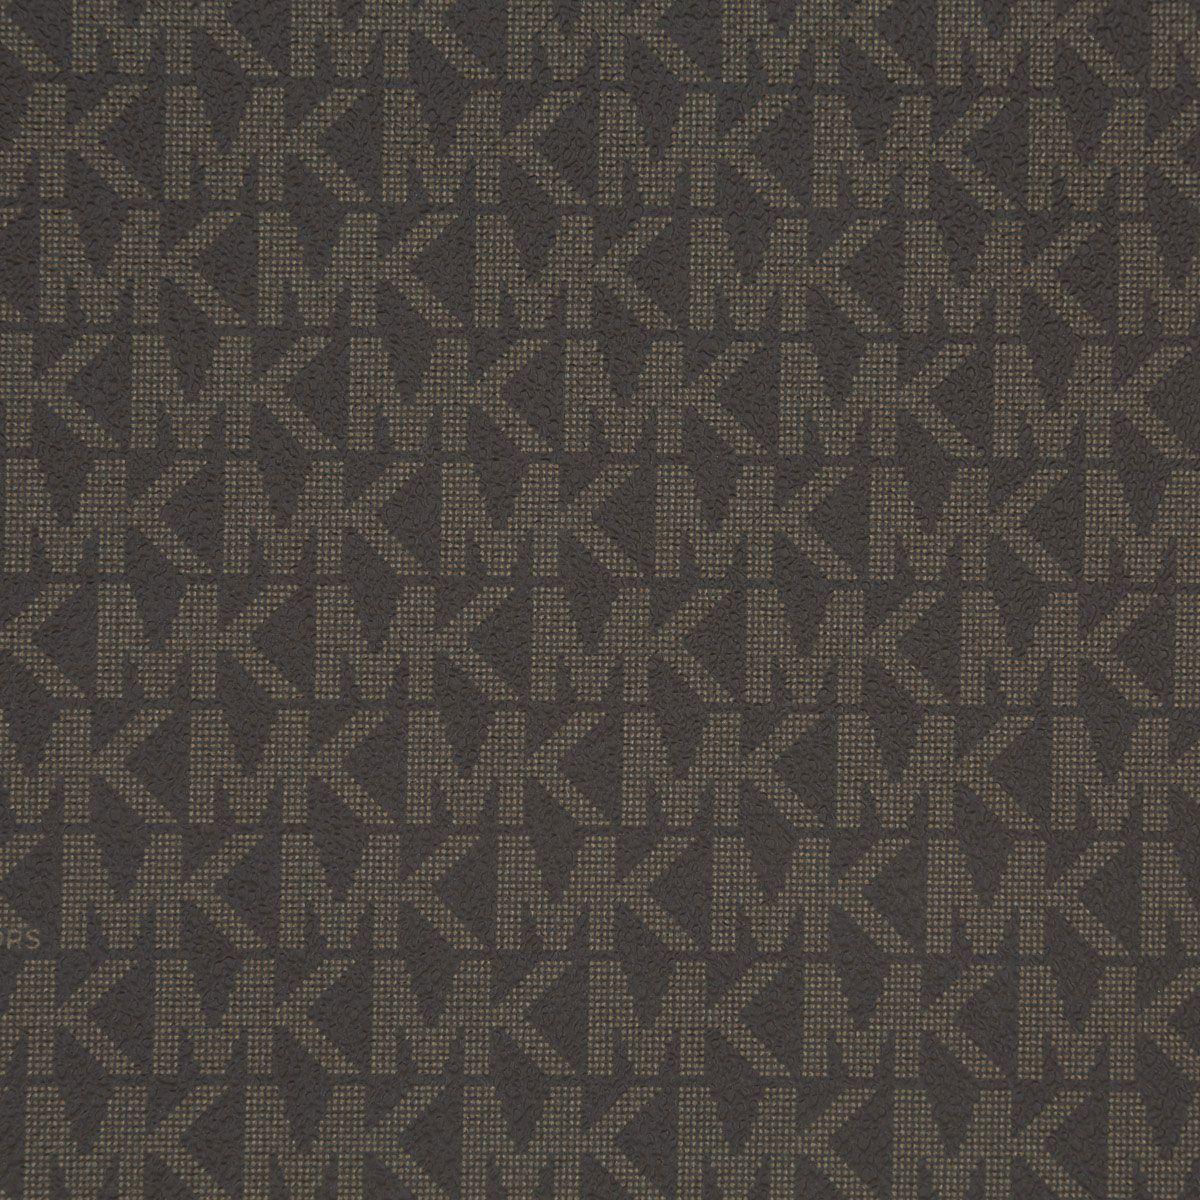 Michael Kors Logo Wallpapers - Top Free Michael Kors Logo Backgrounds ...